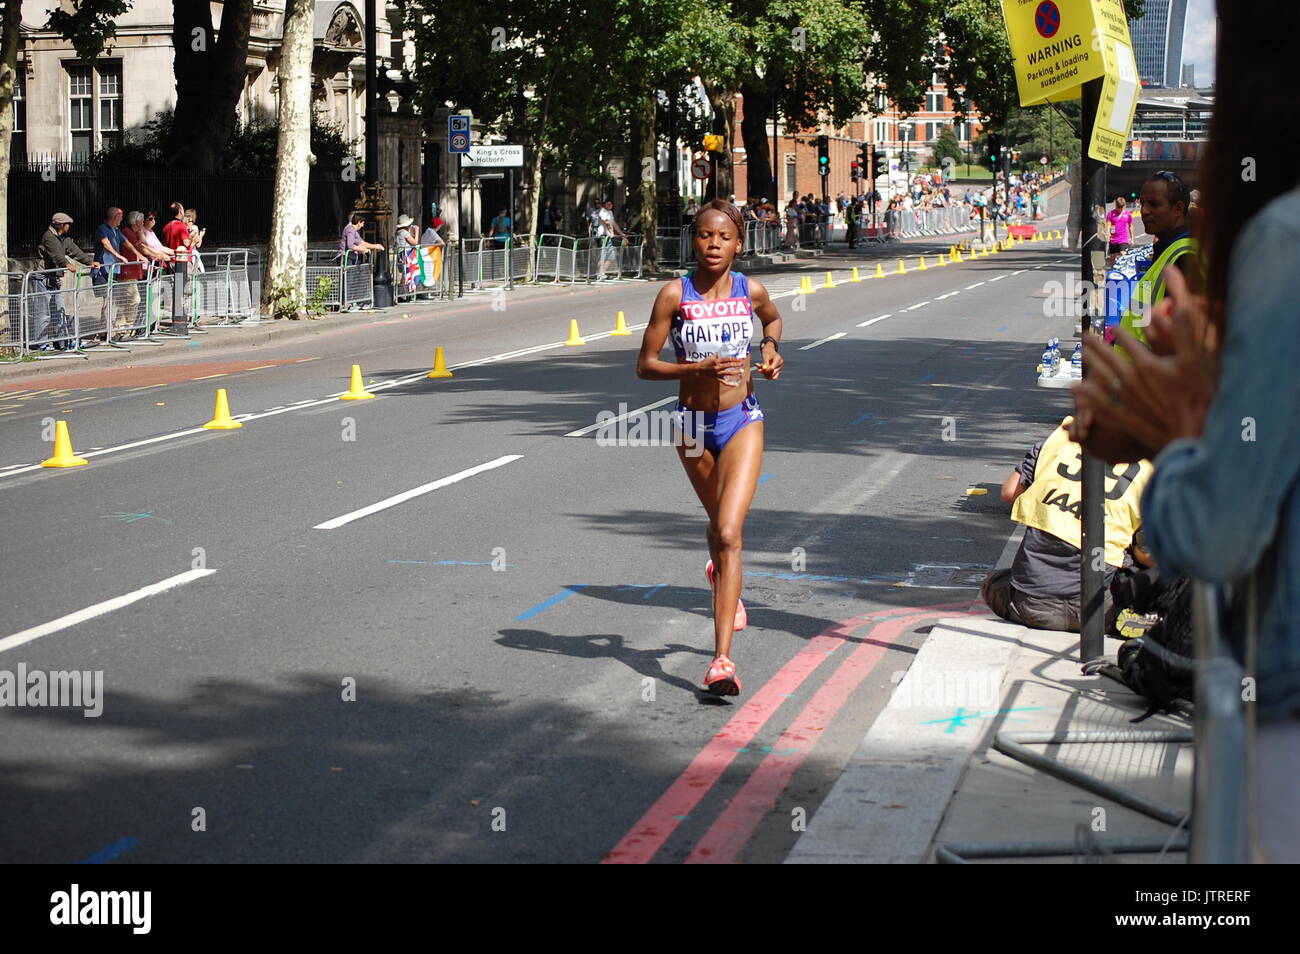 IAAF World Championships Women's Marathon London 2017 Stock Photo